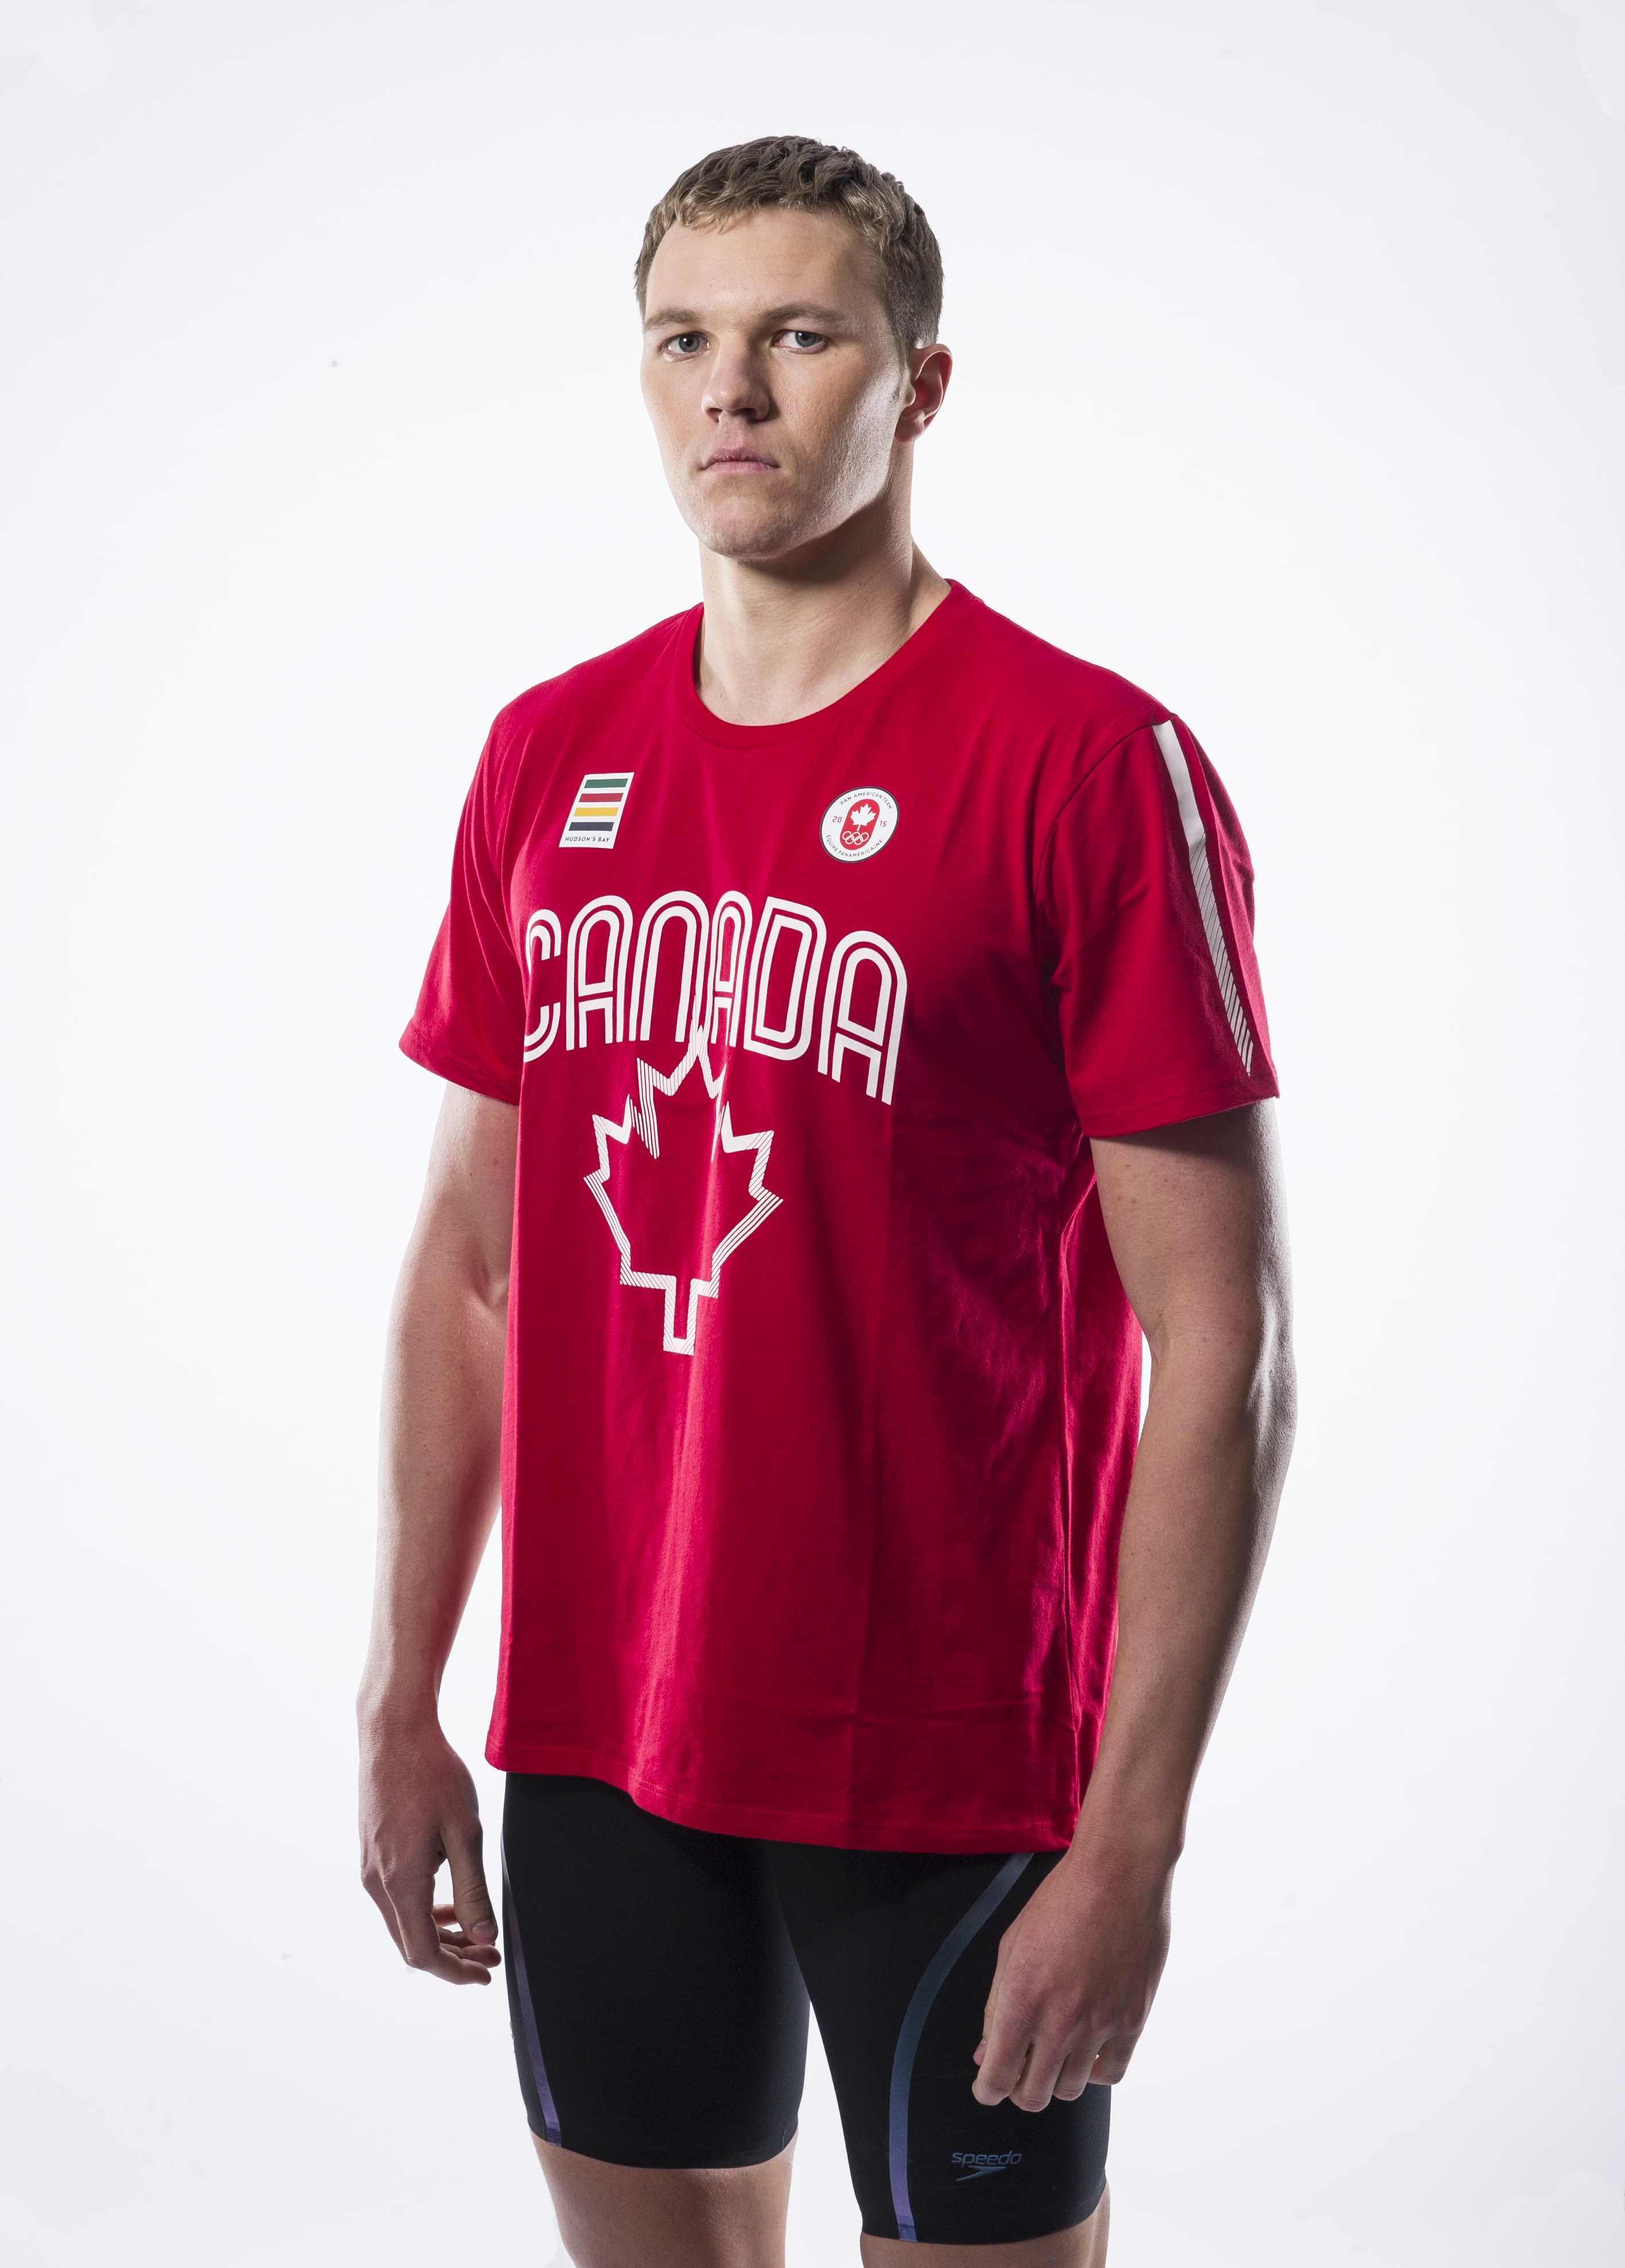 Karl Krug - Team Canada - Official Olympic Team Website